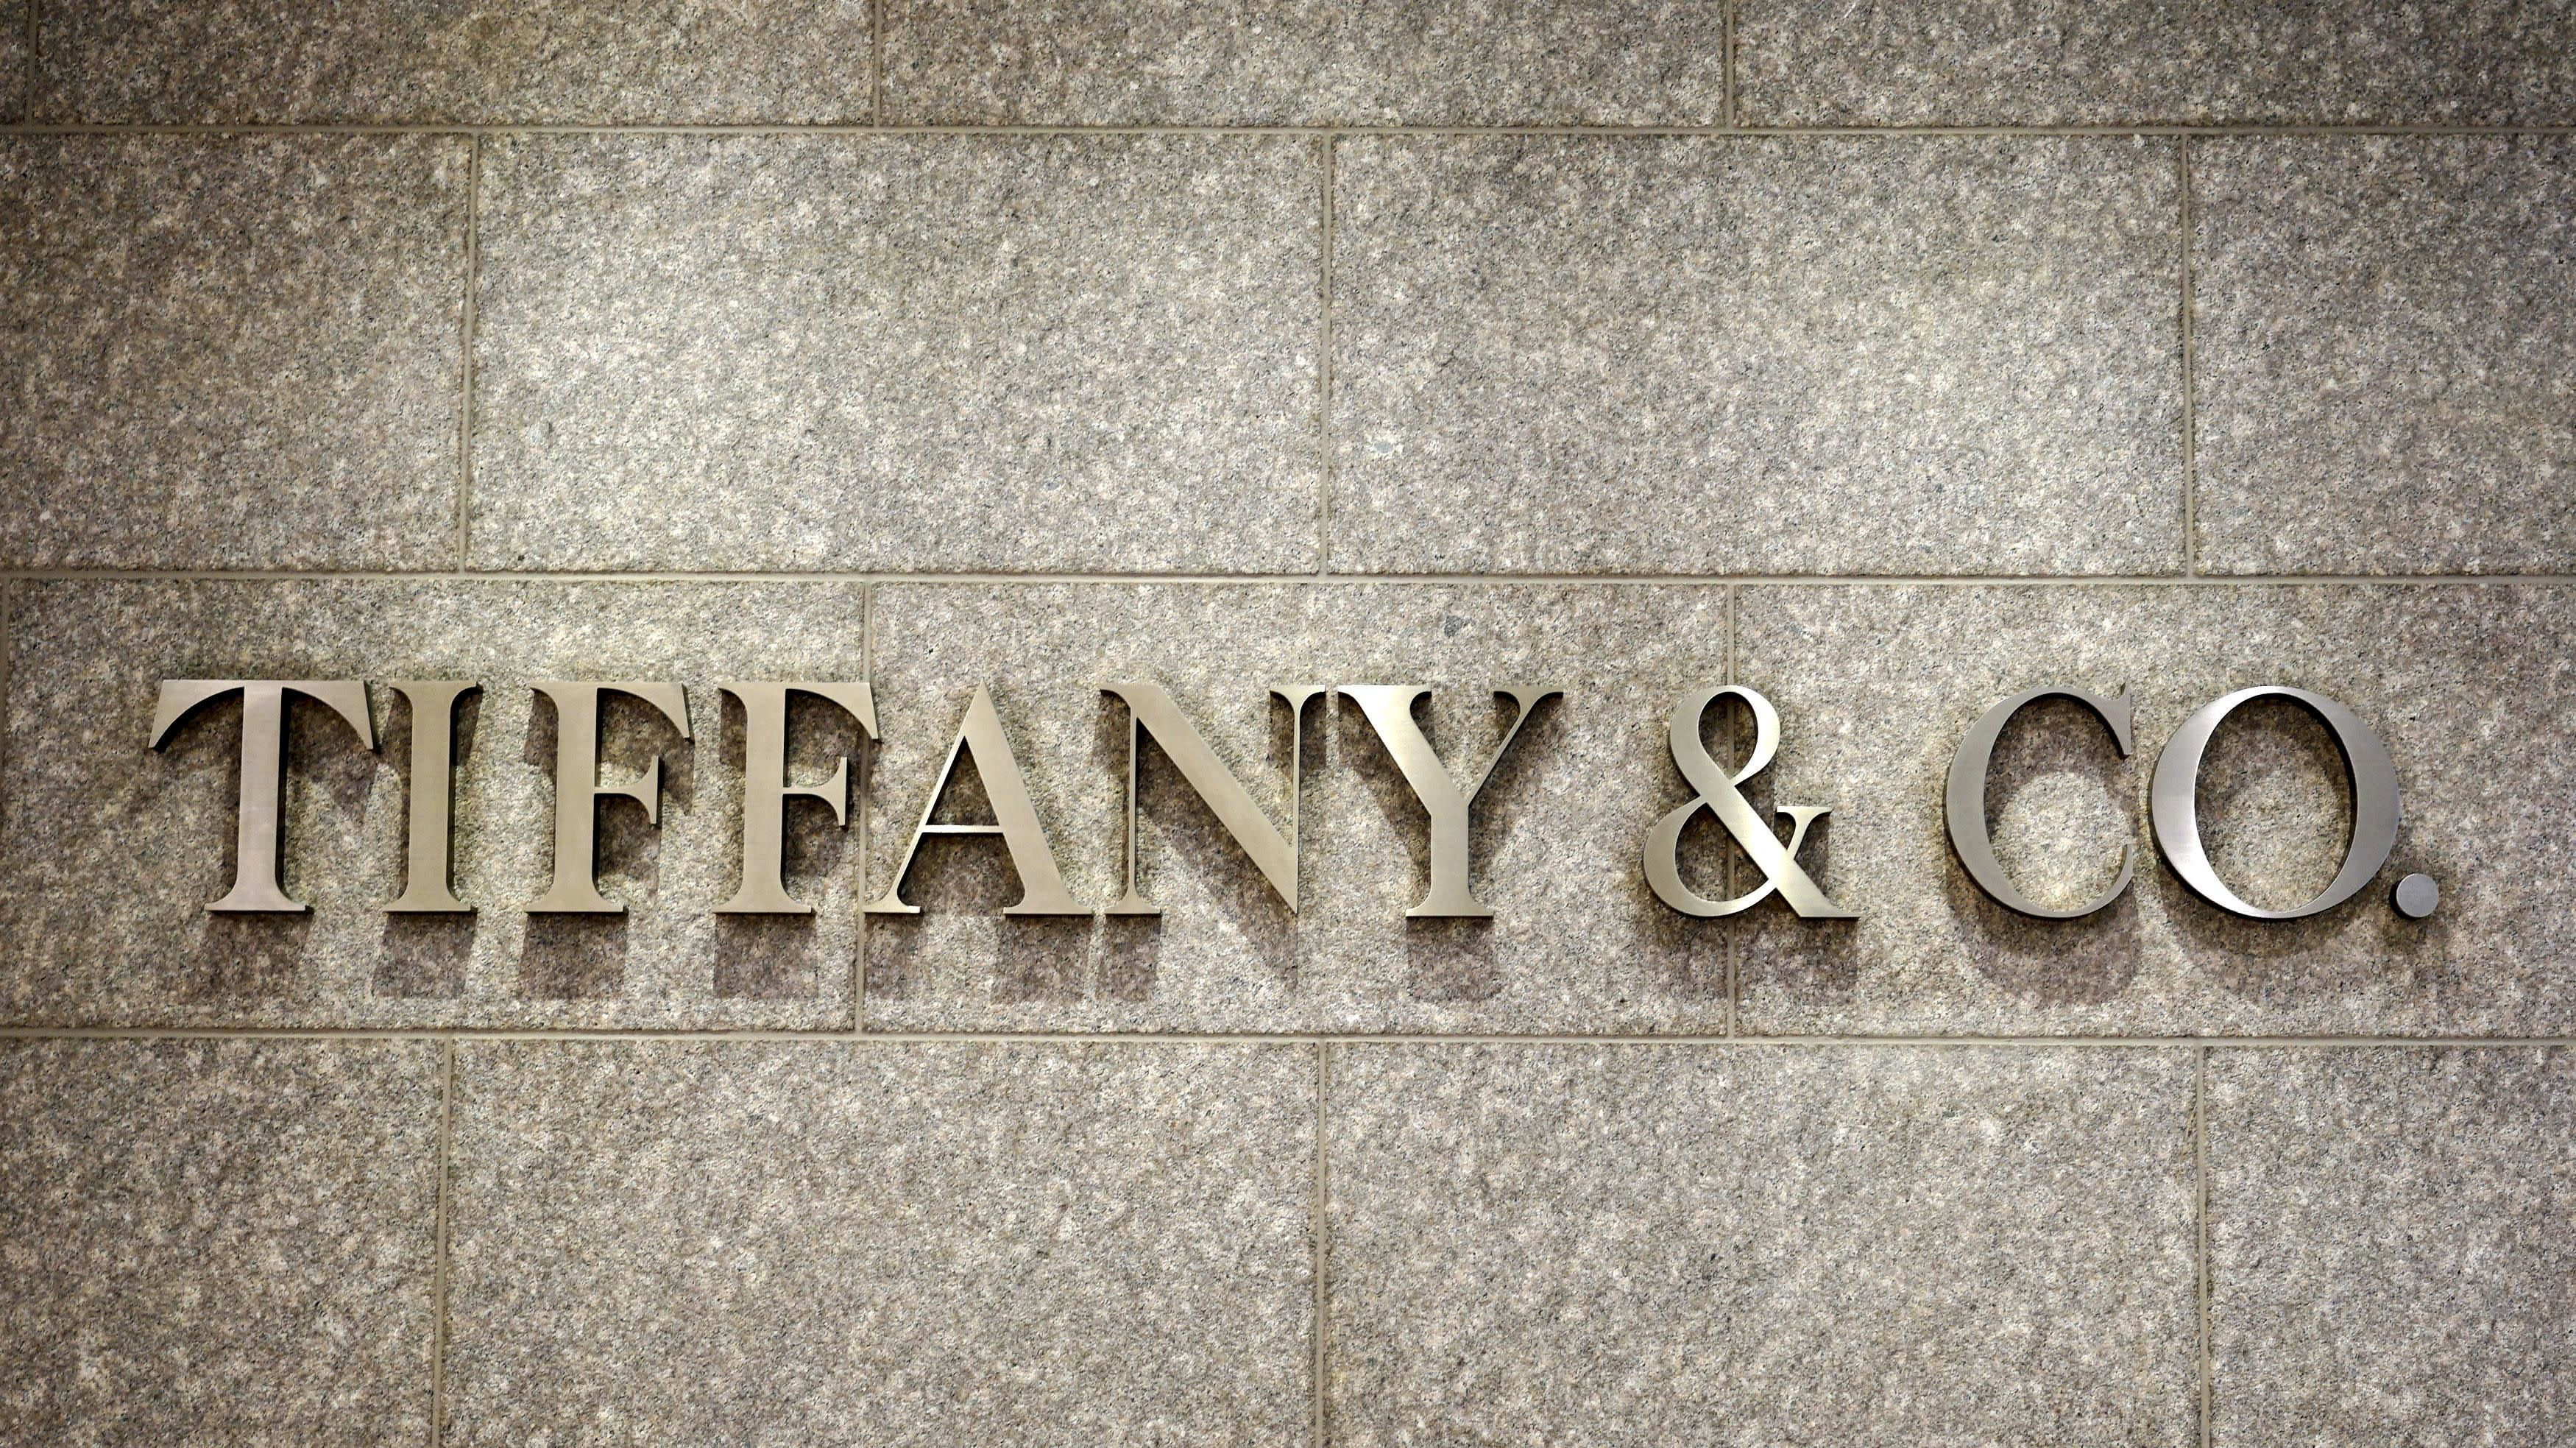 Breakup at Tiffany's: How the LVMH Deal Fell Apart – JCK